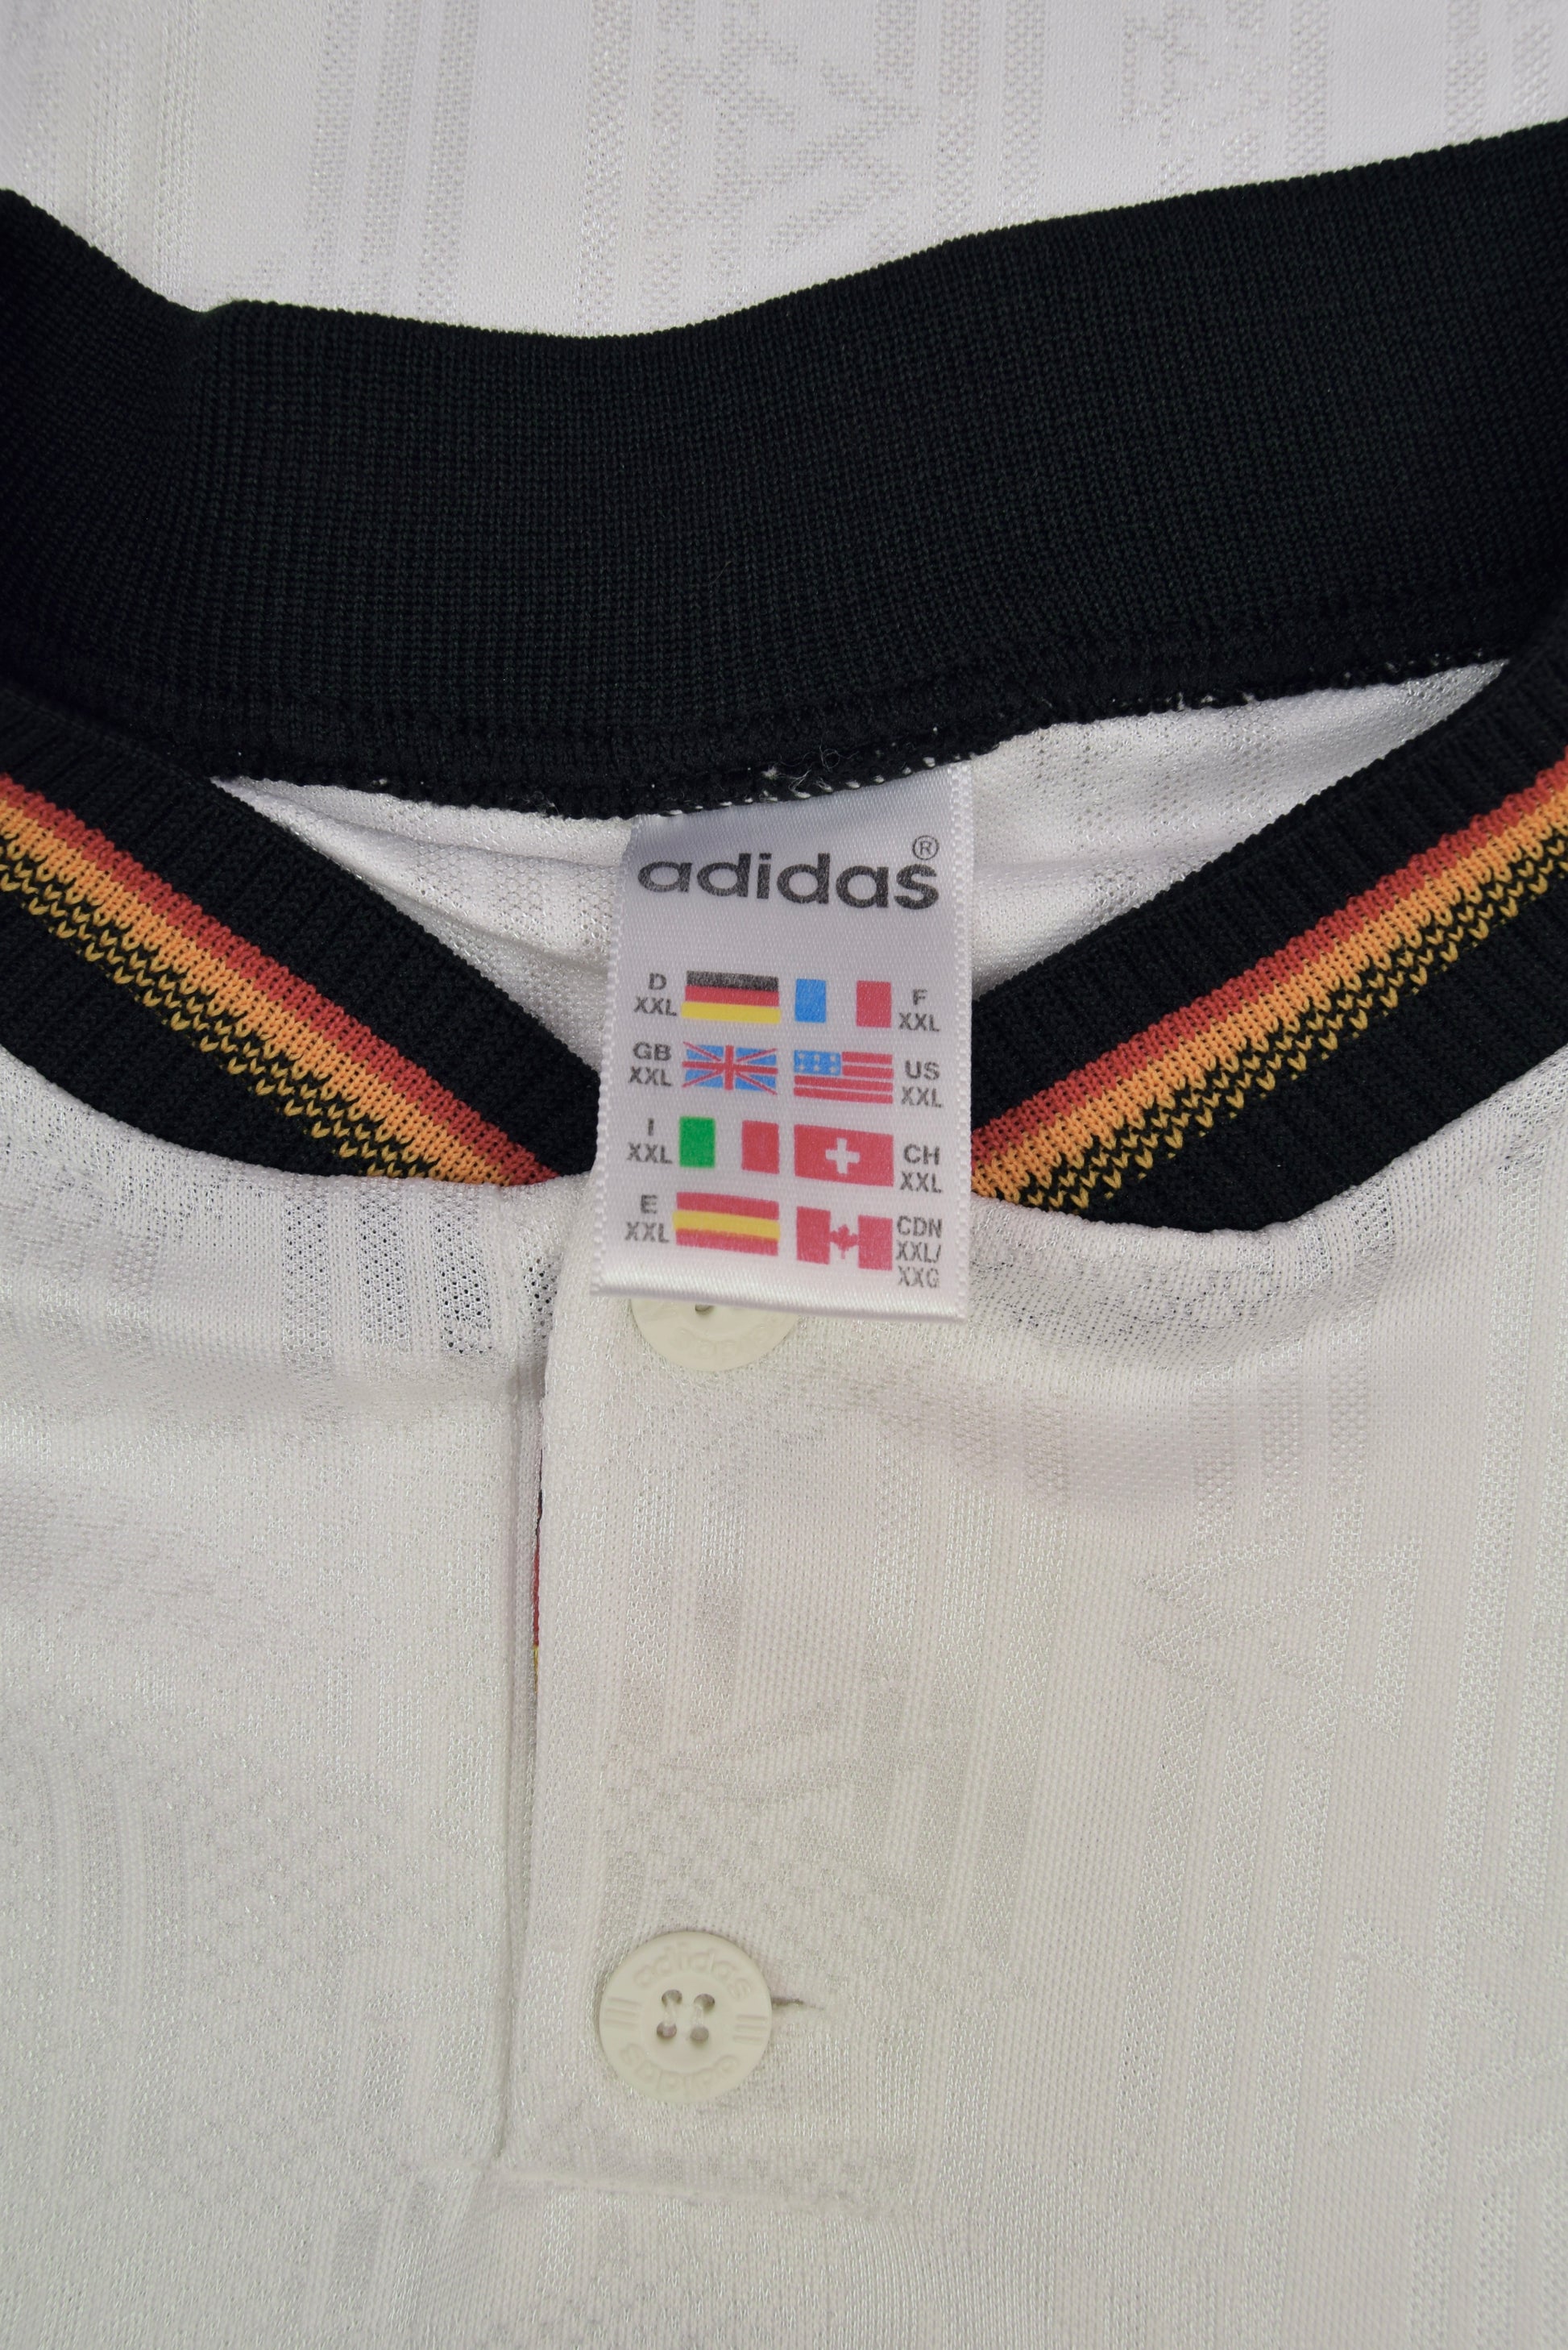 Vintage Germany Deutschland Adidas 1996 - 1997 Size XXL Euro '96 Home Shirt White